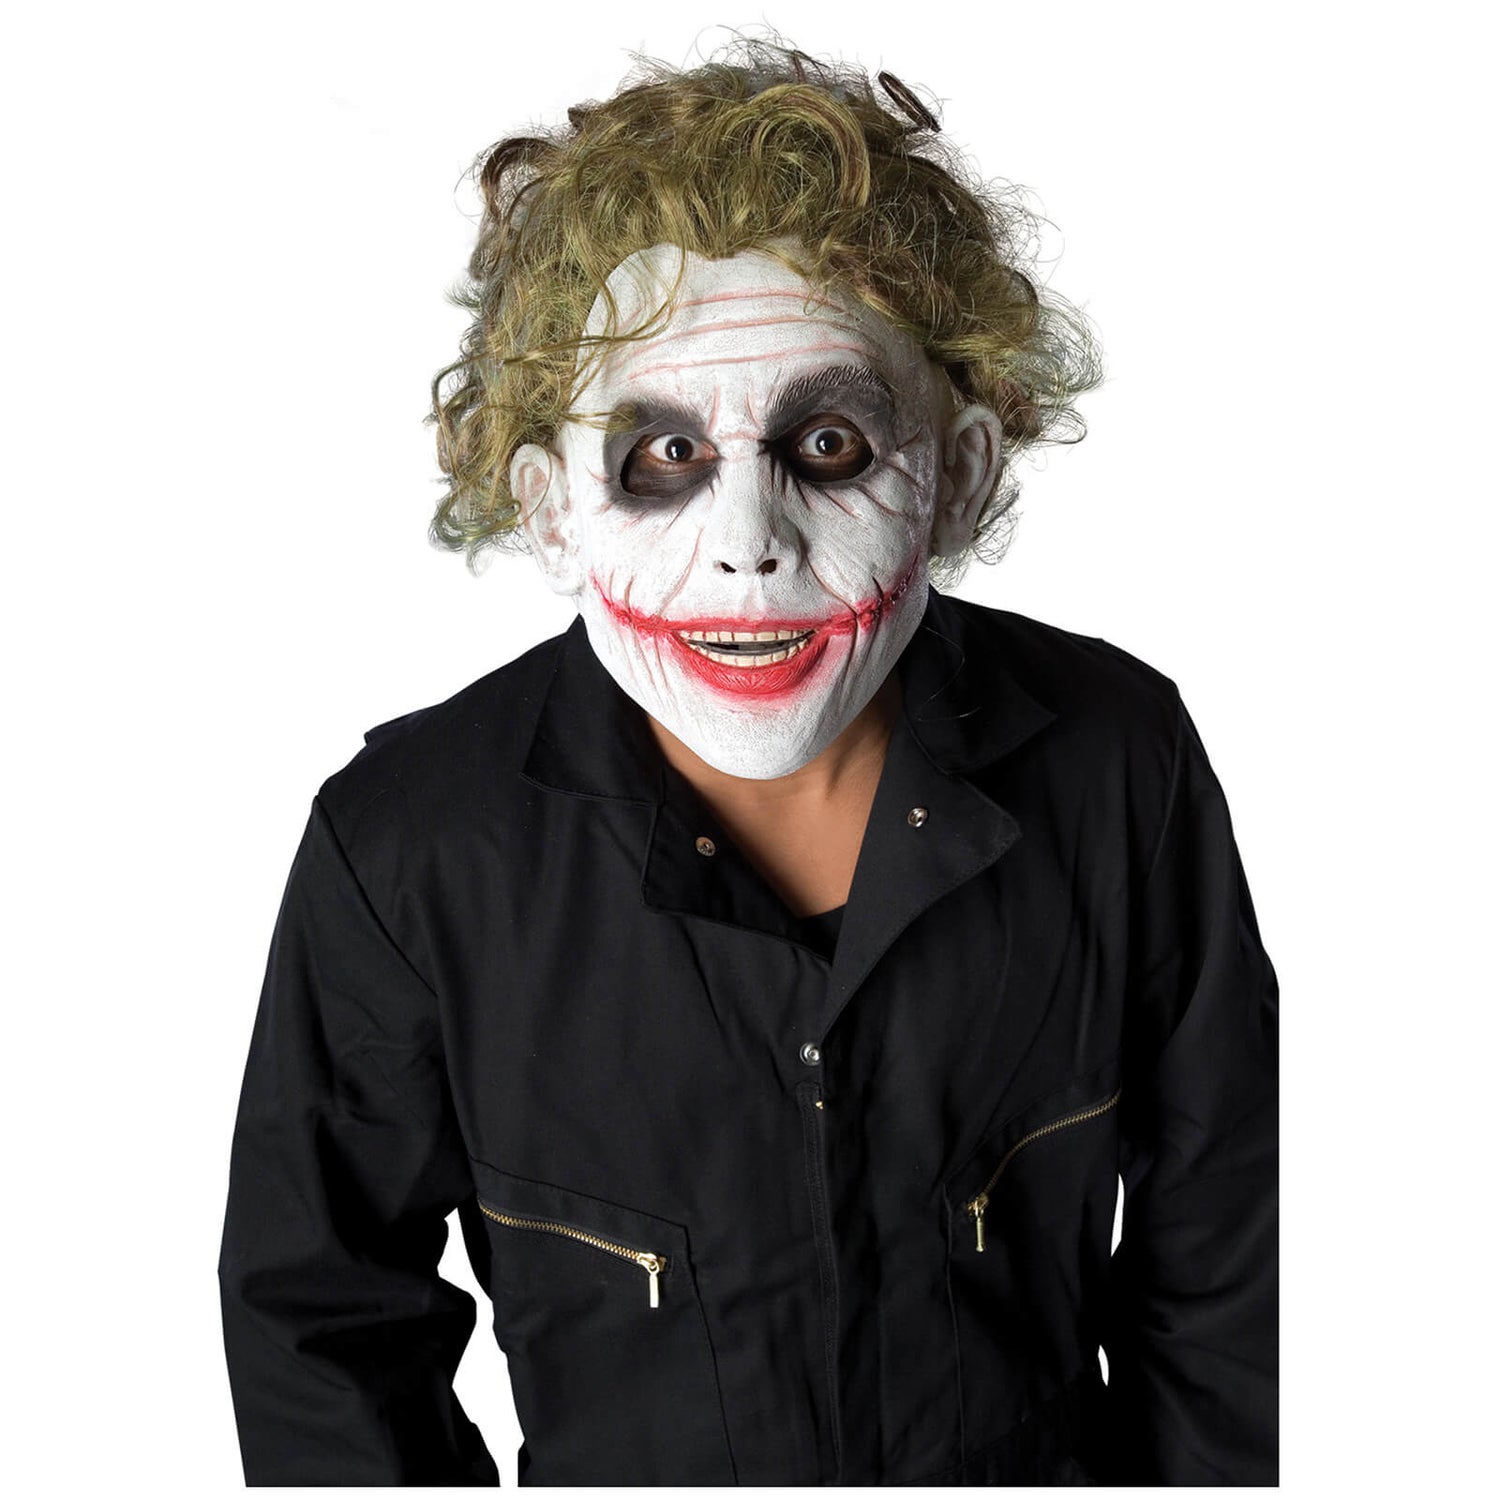 Official Rubies DC Comics Joker Mask with Polypropylene Hair